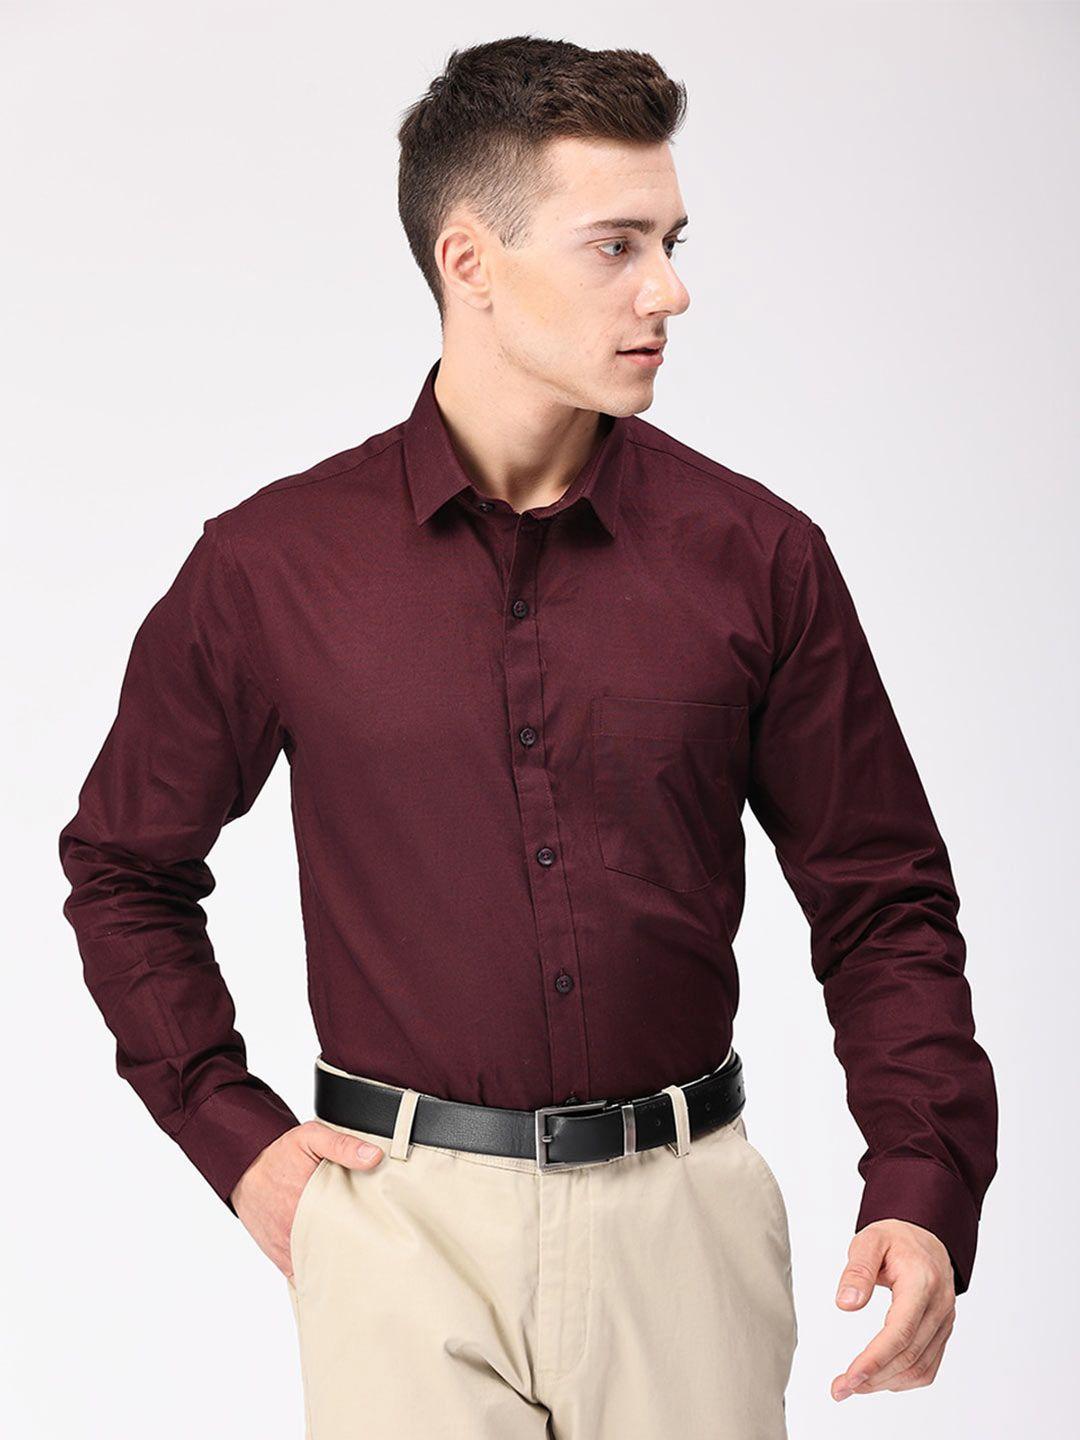 copperline spread collar comfort slim fit formal cotton shirt